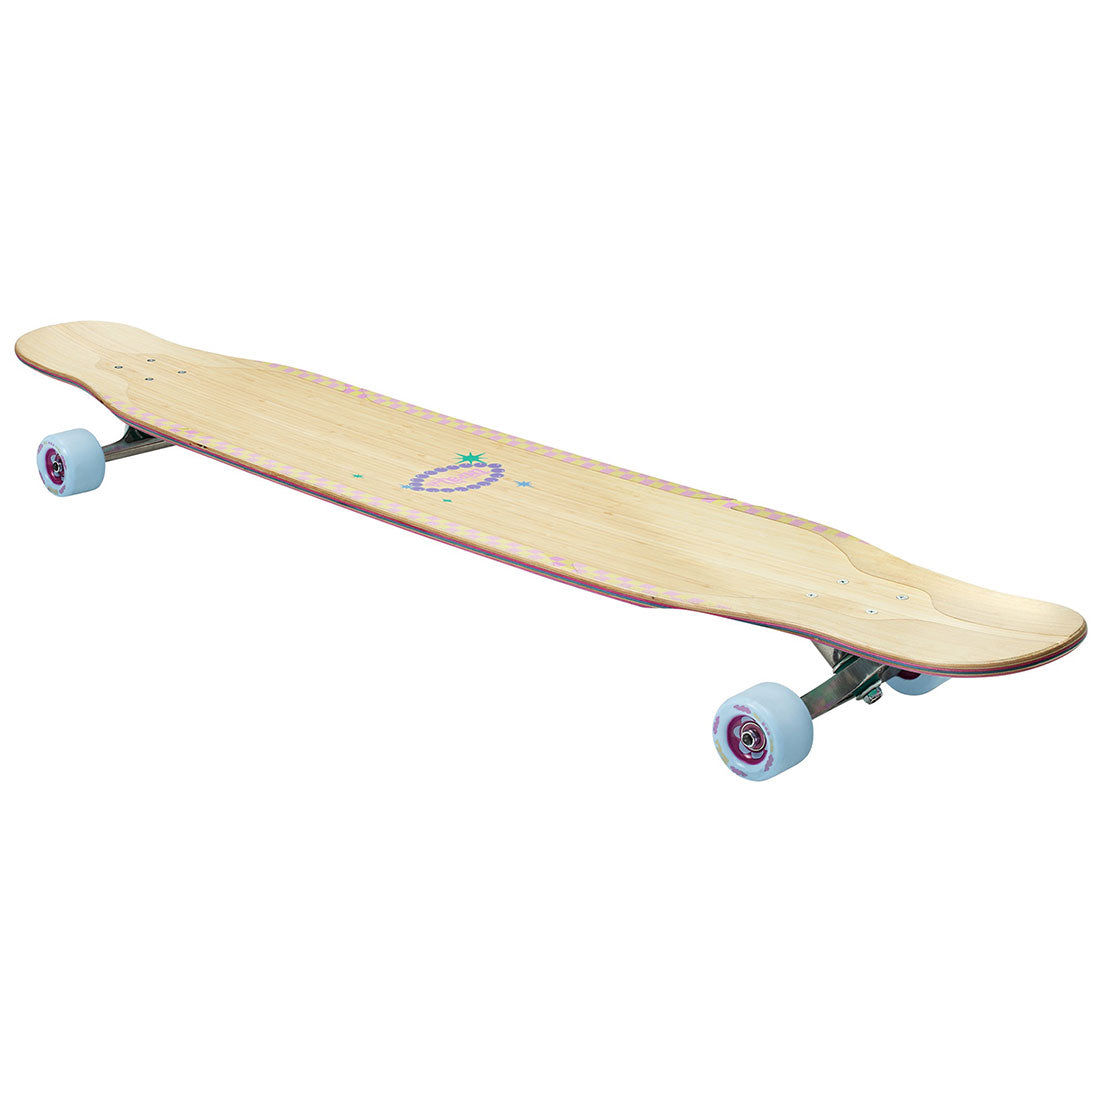 Impala Muse 48.5 Dancing Longboard - MakeMeUnfazed Skateboard Completes Longboards